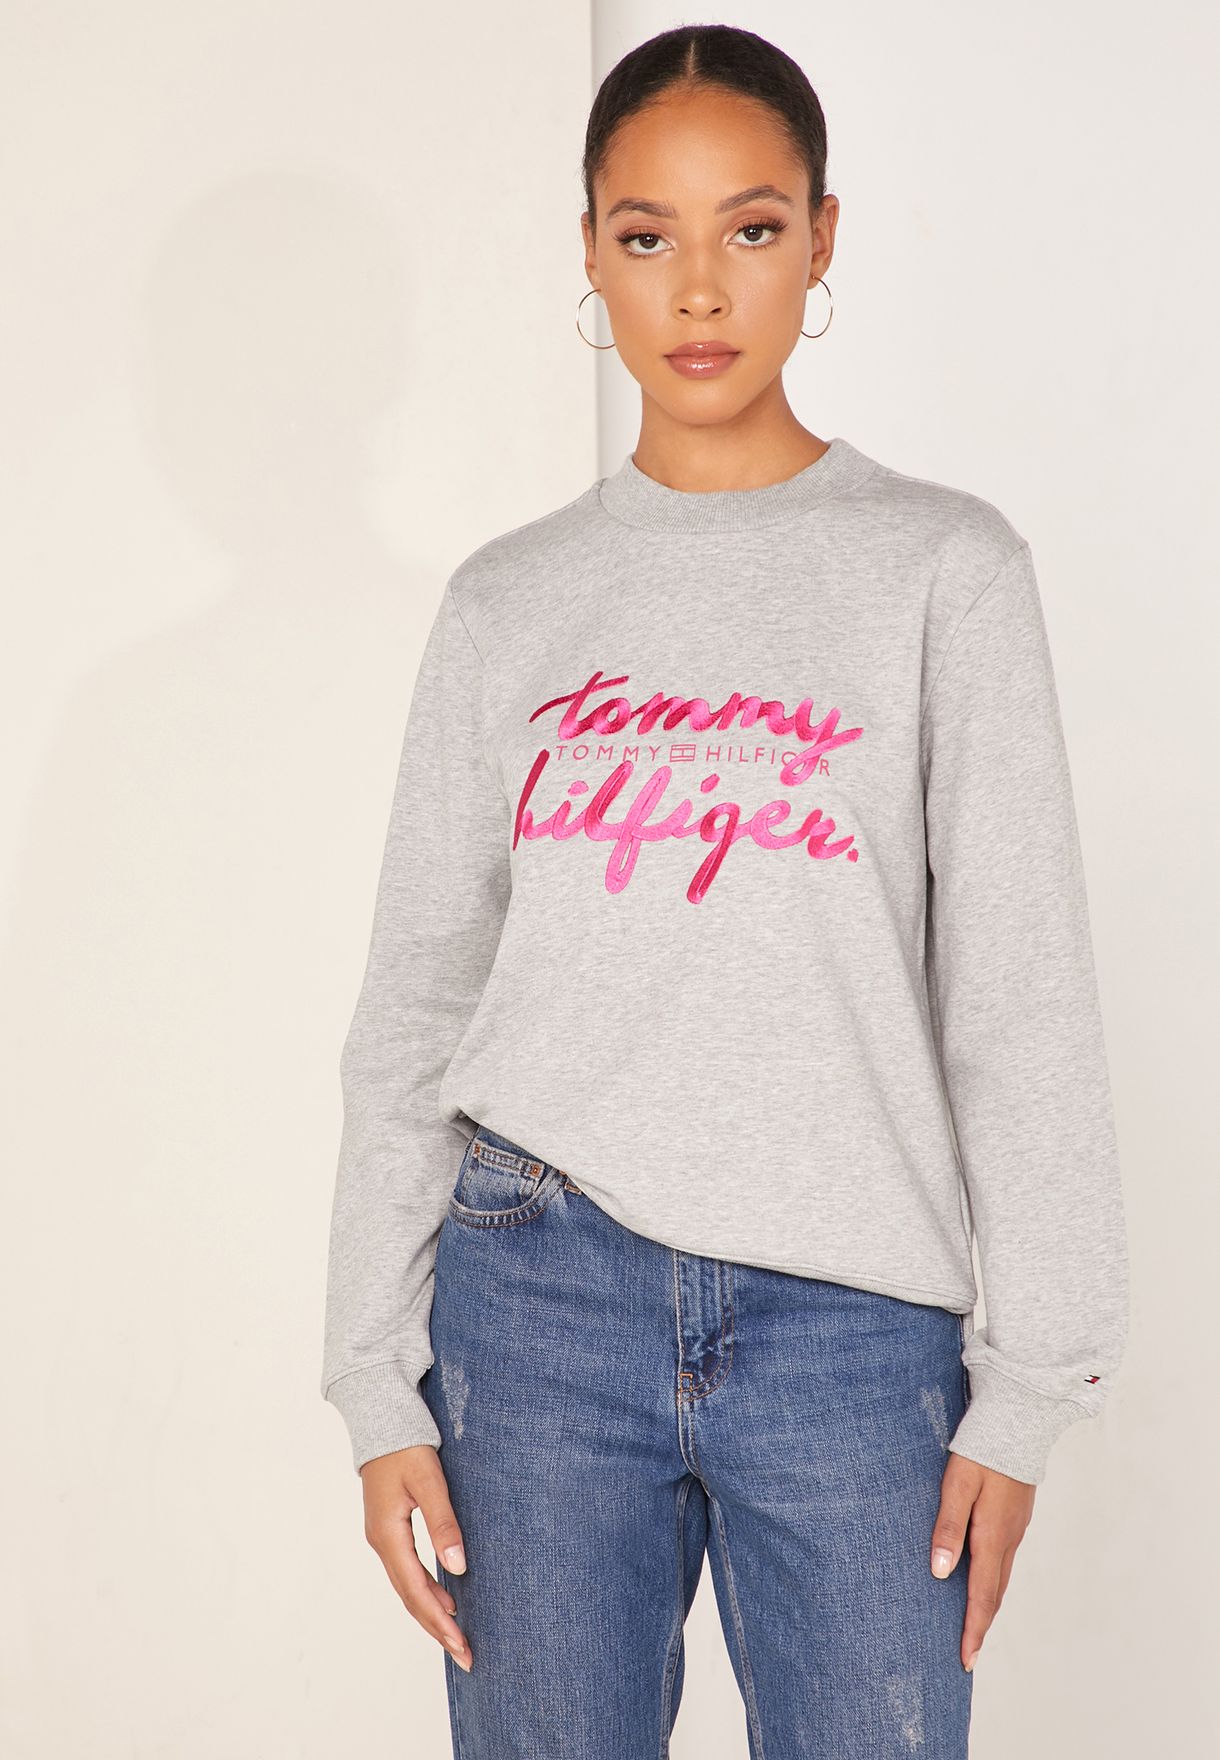 tommy hilfiger women's sweatshirt grey